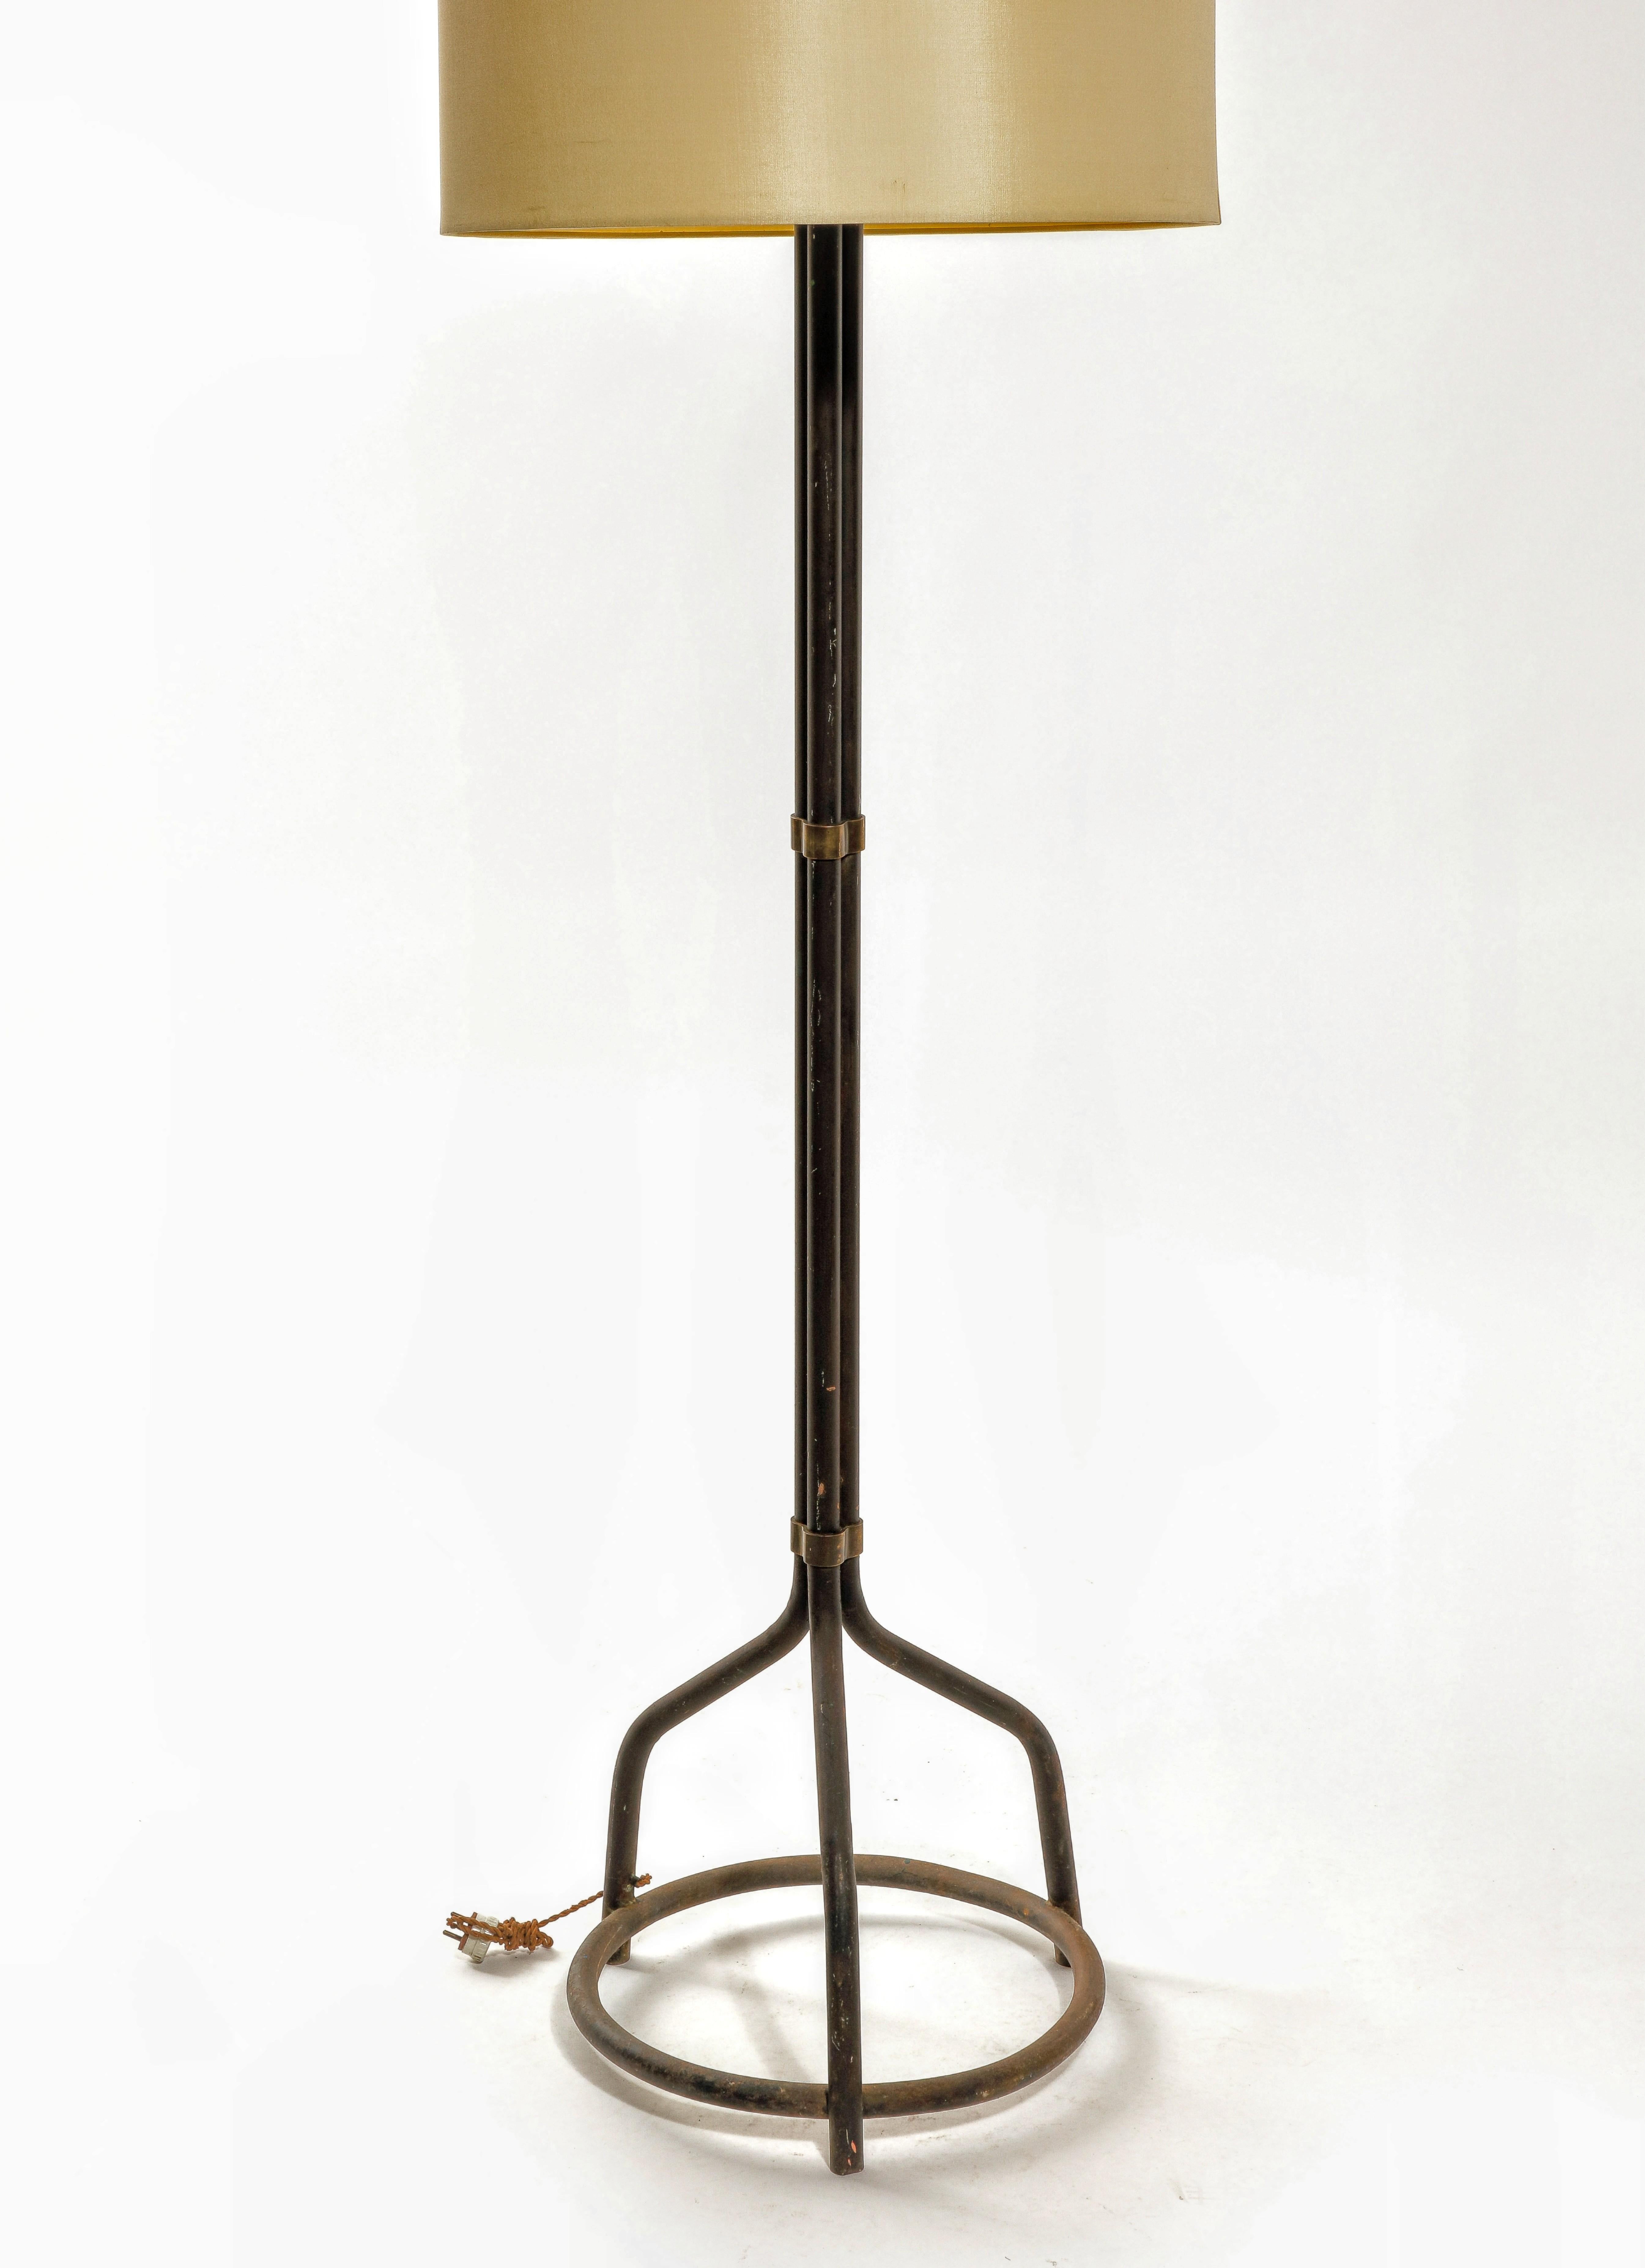 Brutalist Tripod Steel Tube Floor Lamp with Brass Details - France 1970's For Sale 5